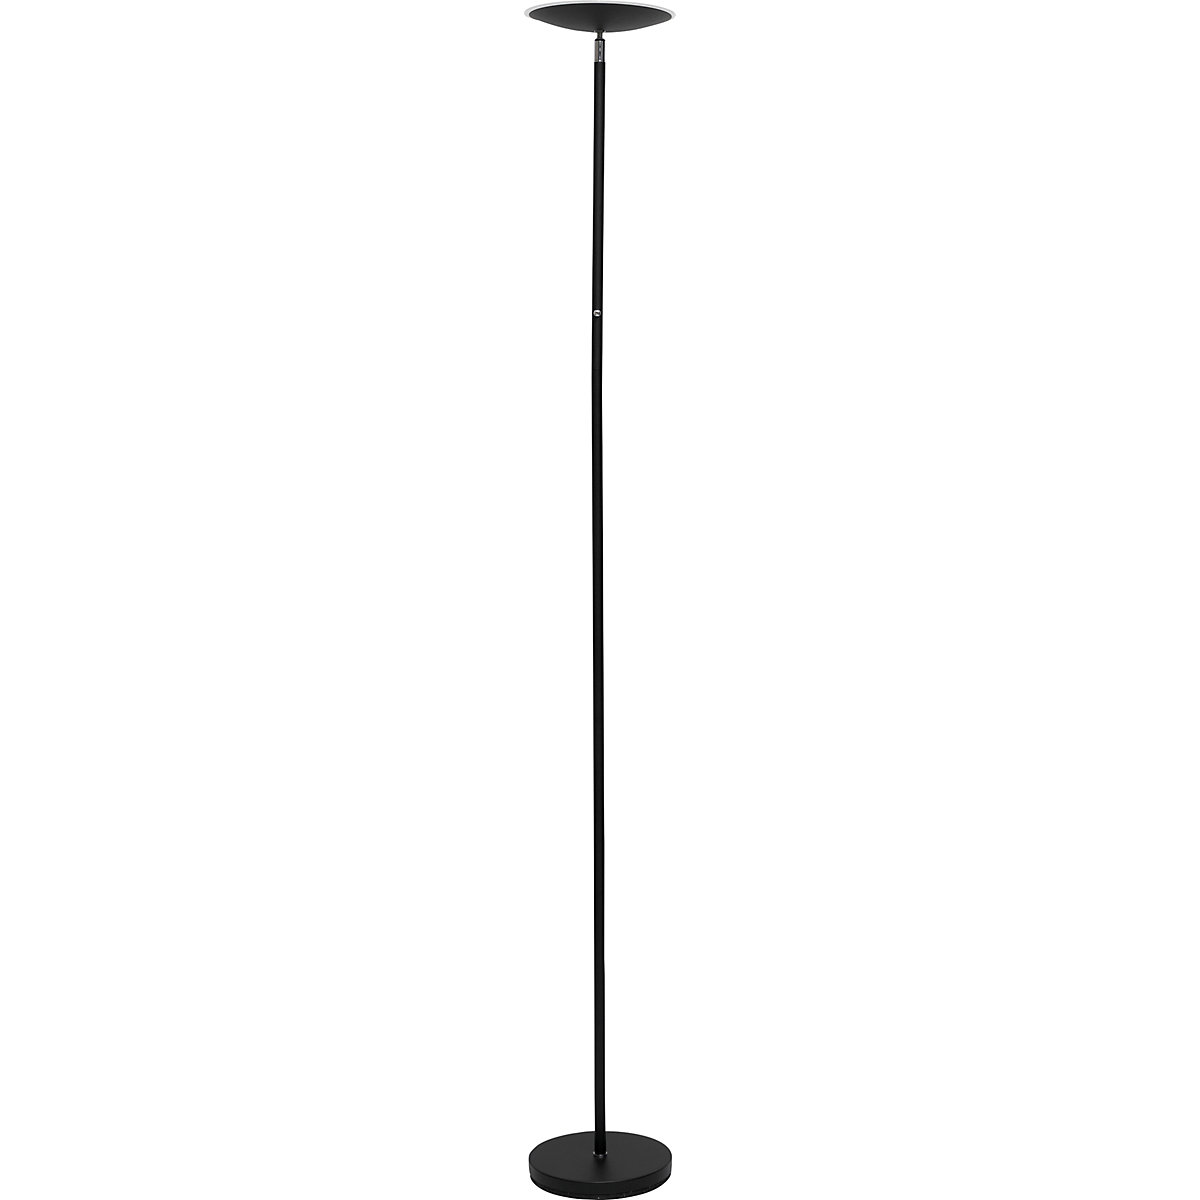 Stoječa LED-svetilka MAULsphere, obrnjena v strop – MAUL